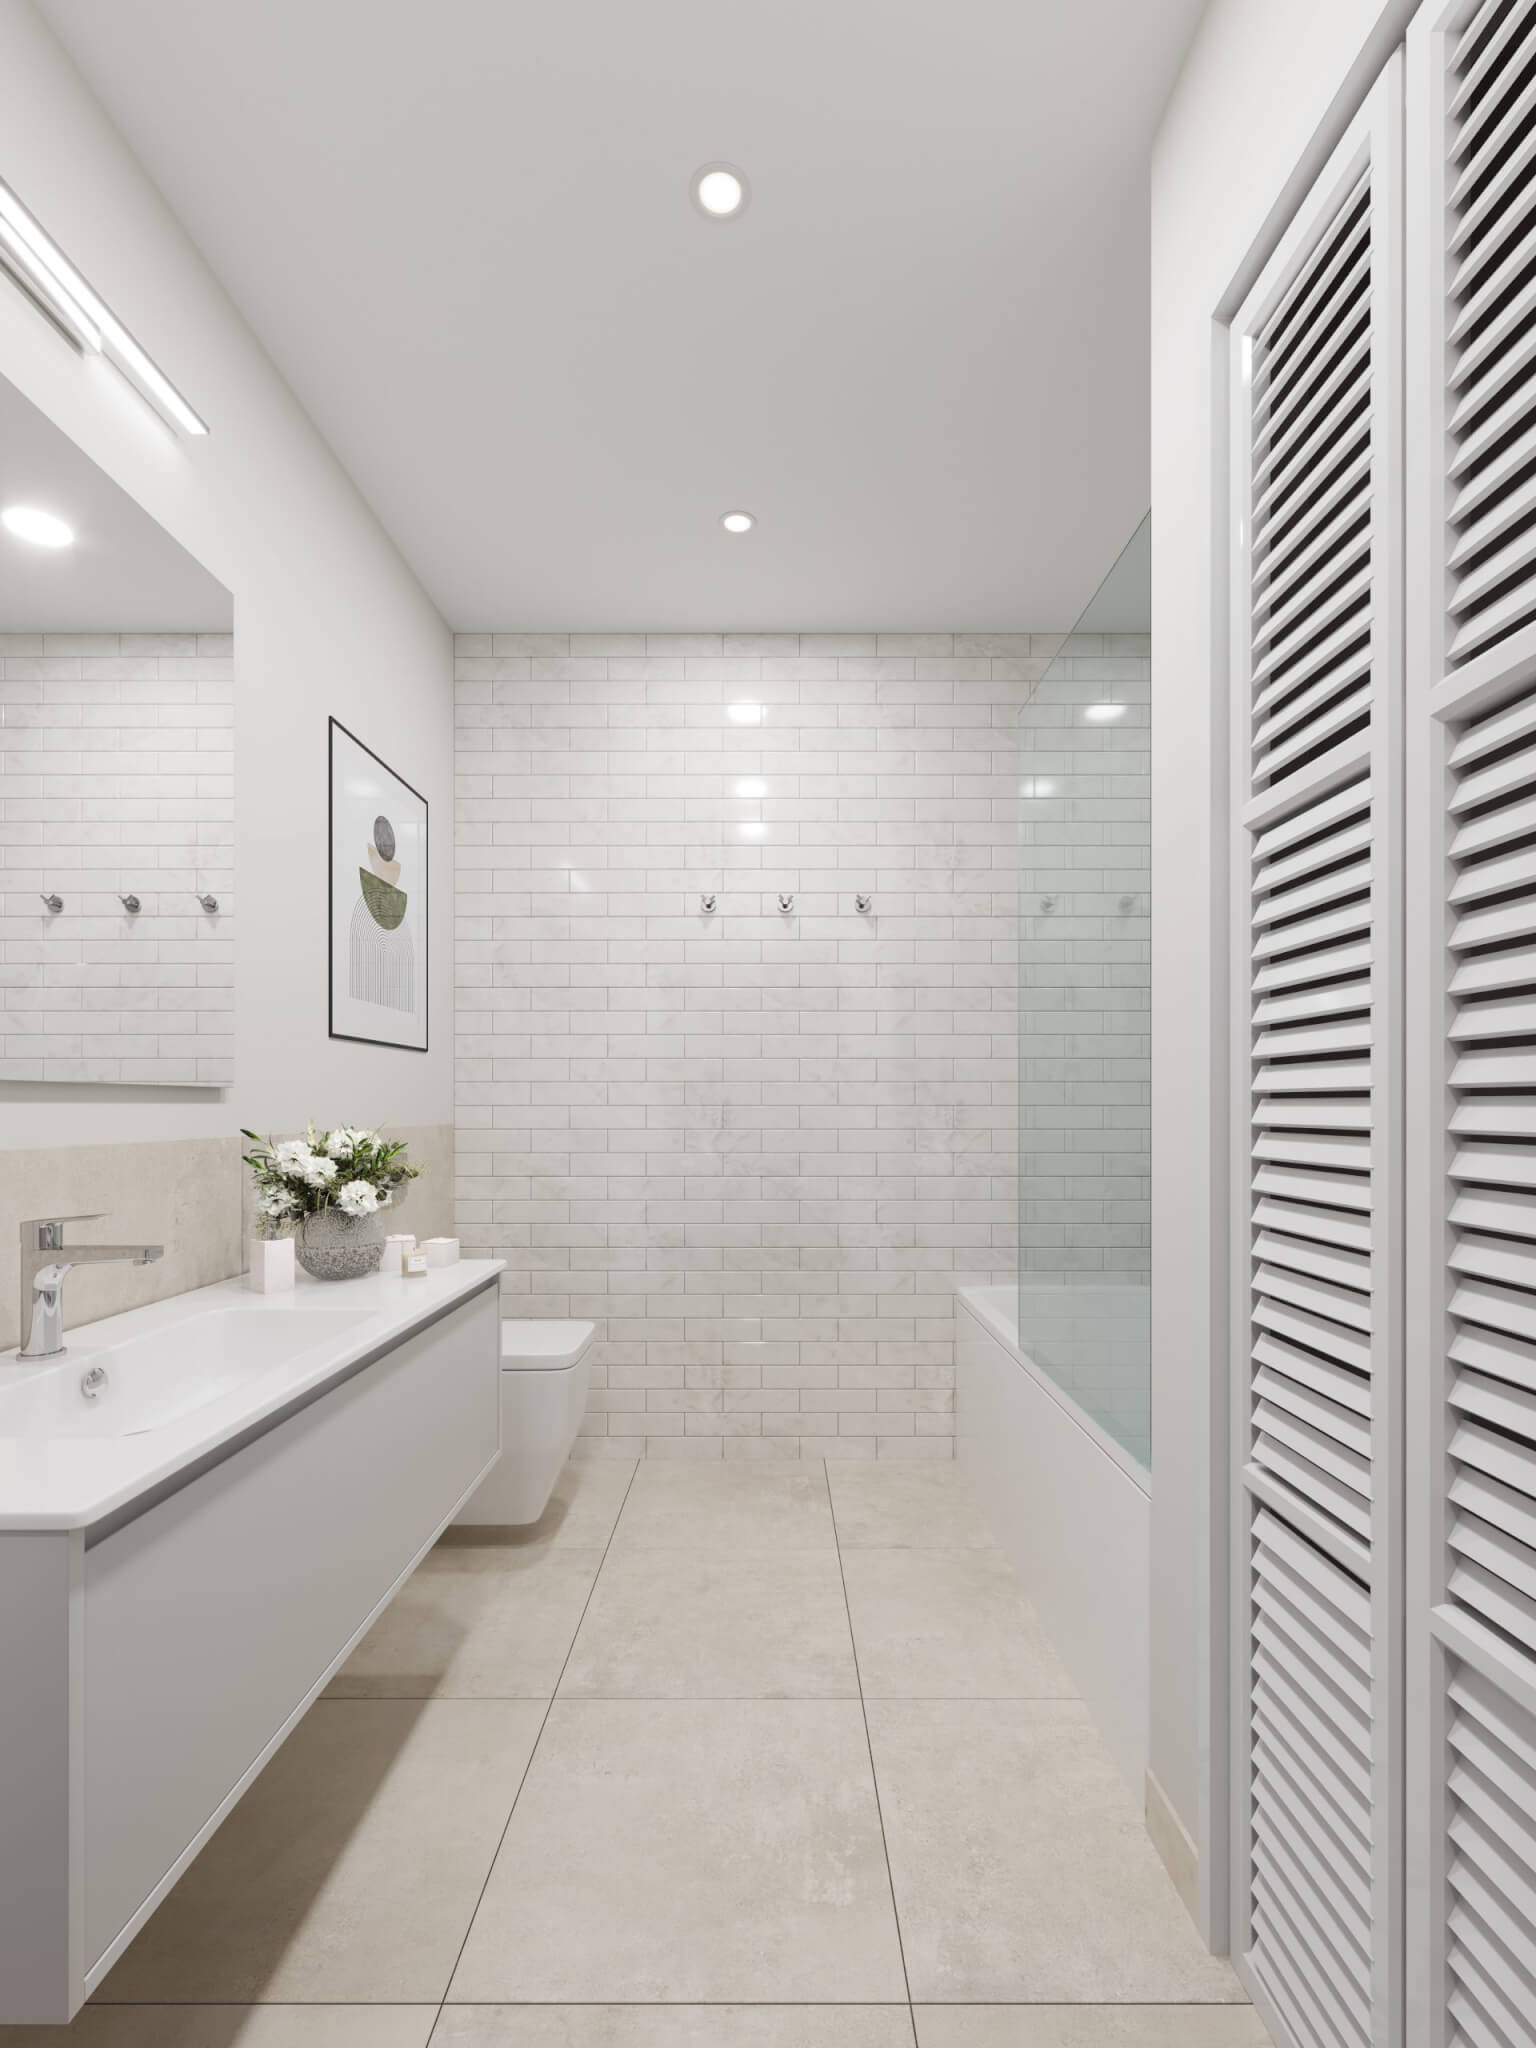 Bathroom with modern design.